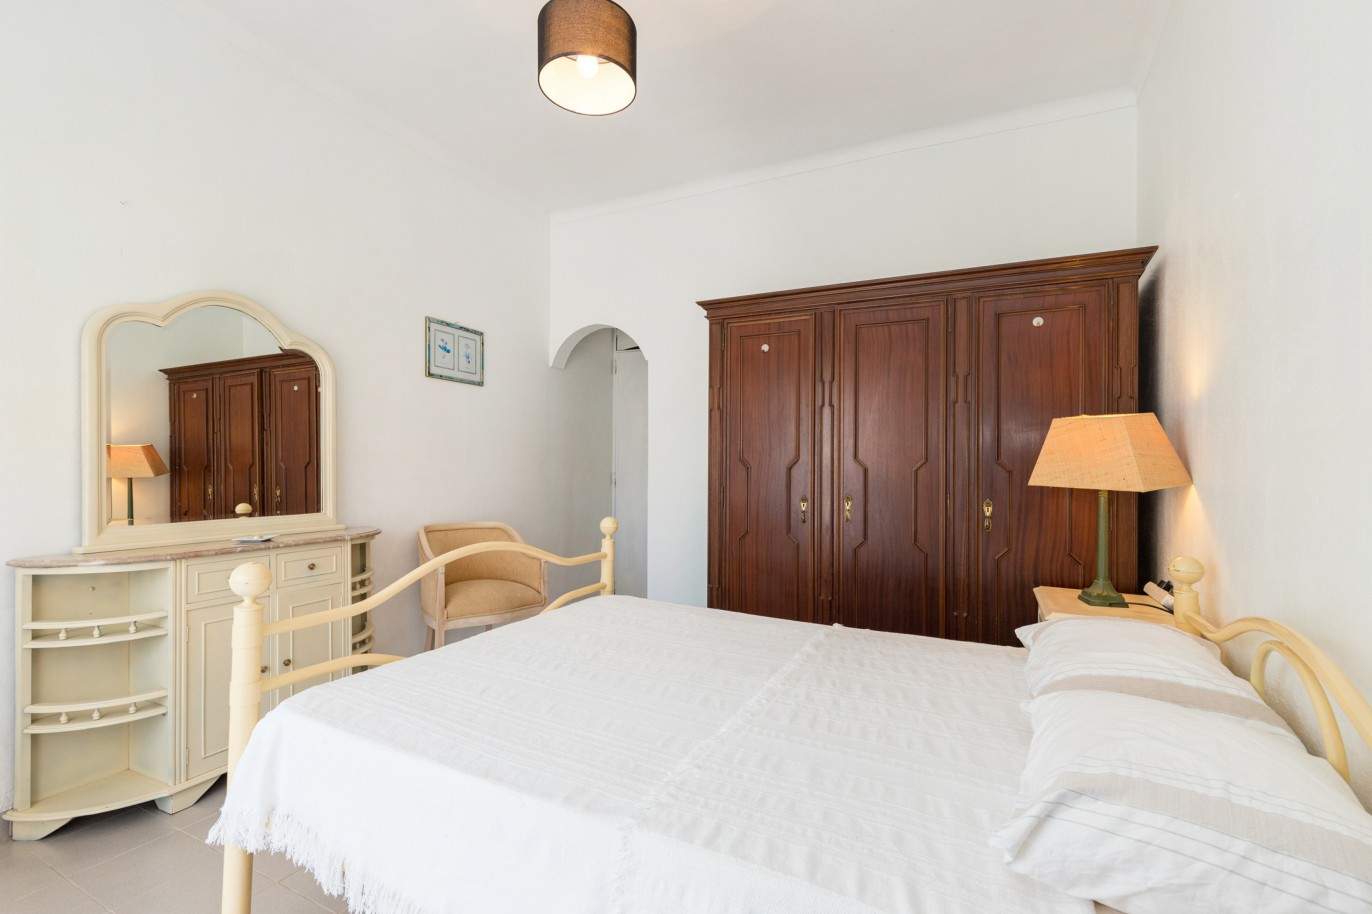 4 Bedroom Villa, for sale in Lagos, Algarve_200335